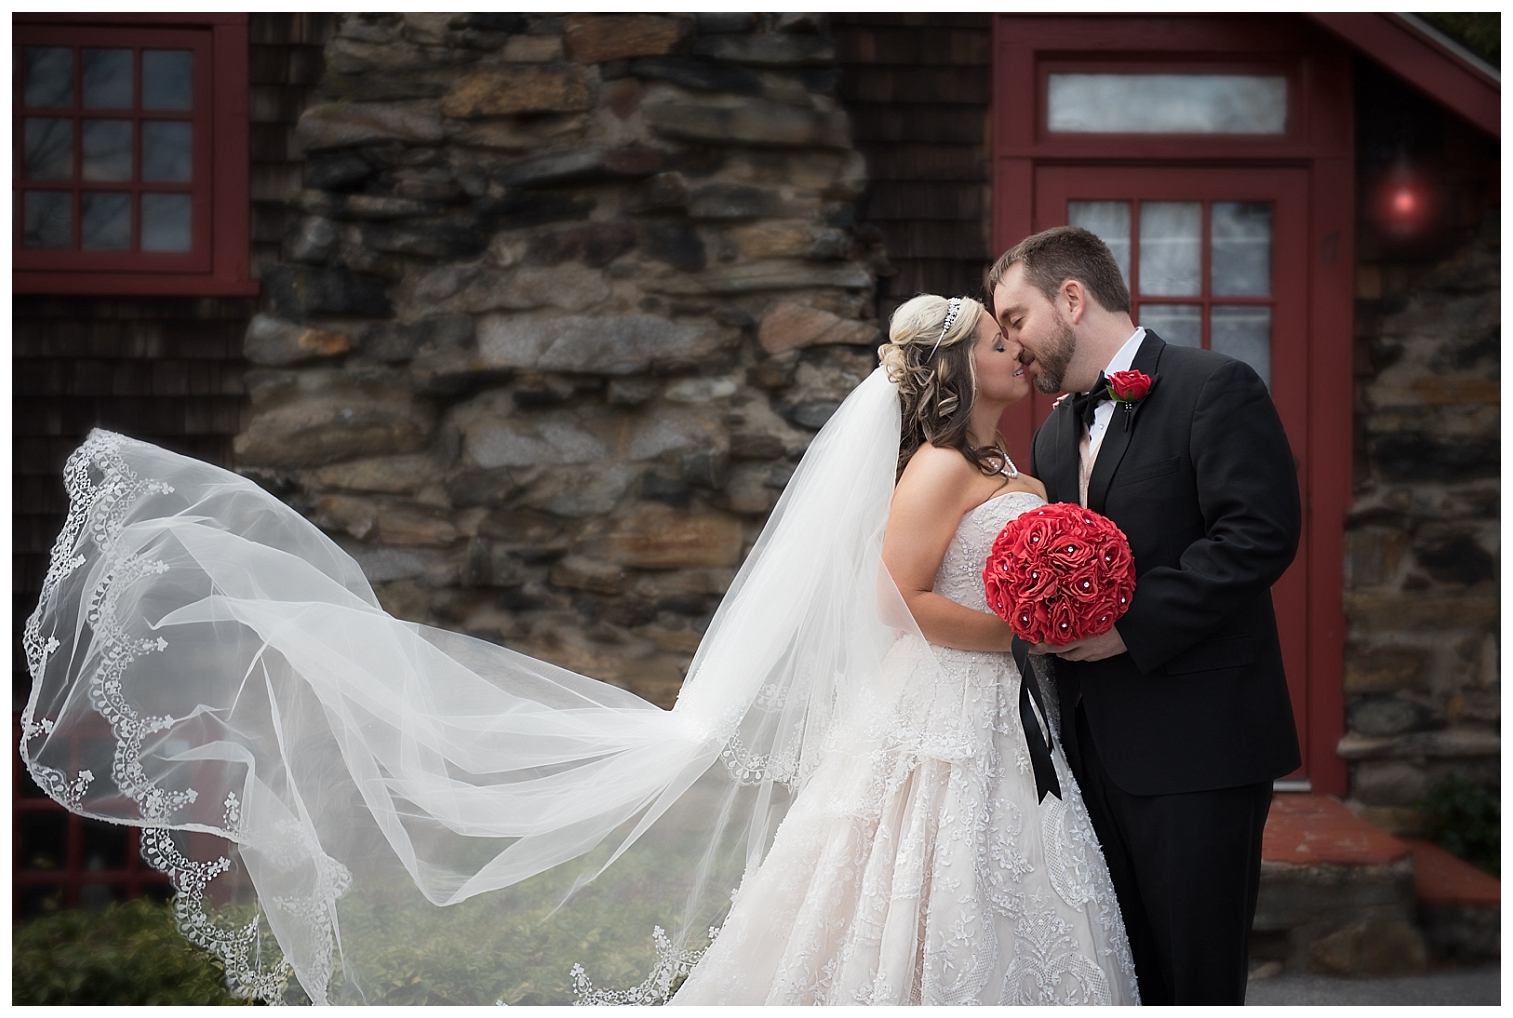 Our Anniversary | A Love Story |Virginia Wedding Photographer